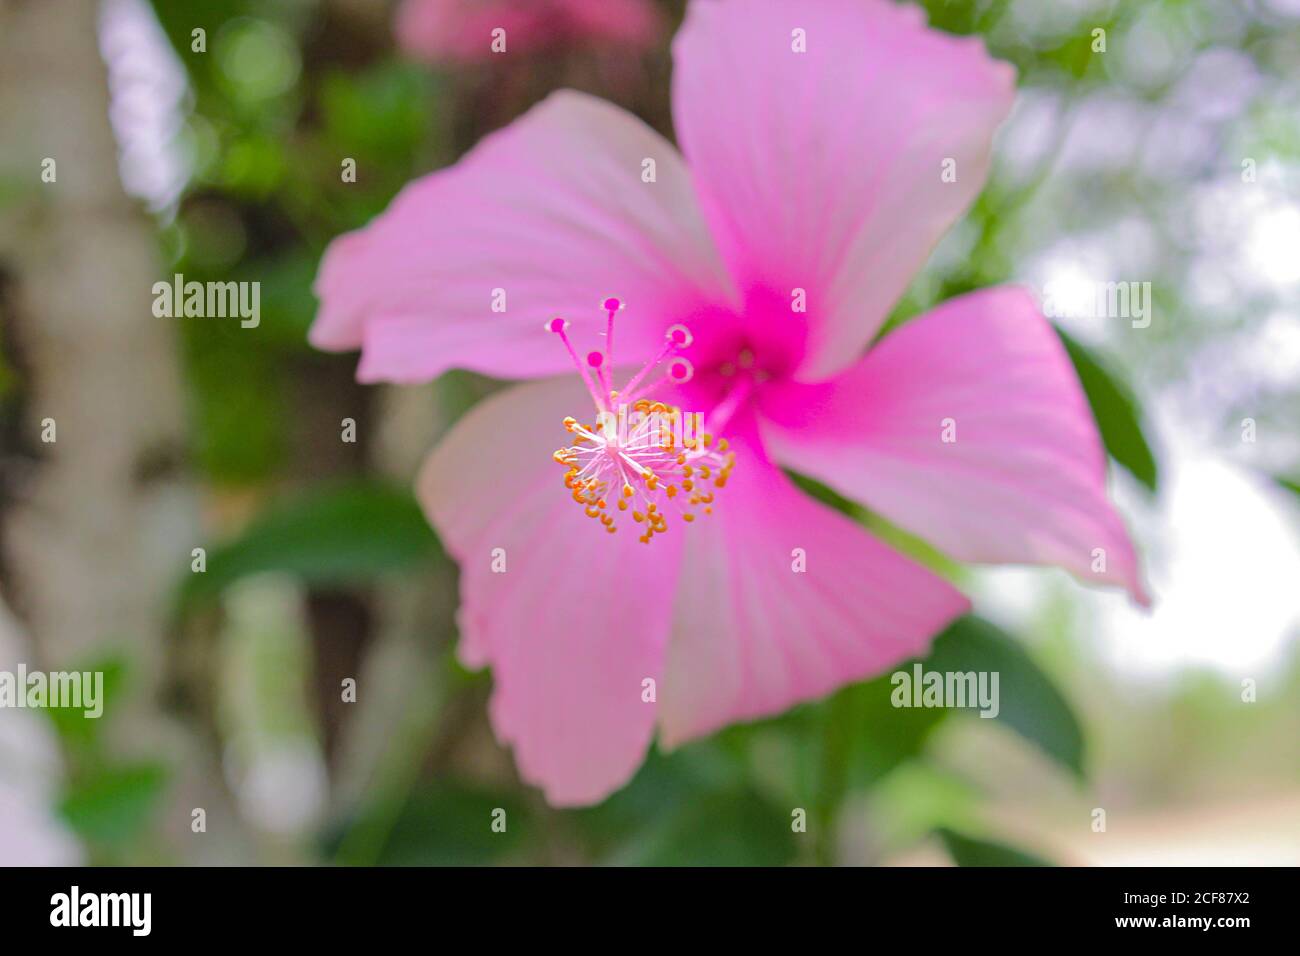 Rosa Bunga raya Blume Malaysia nationale Blume Bild Hintergrund Stockfoto